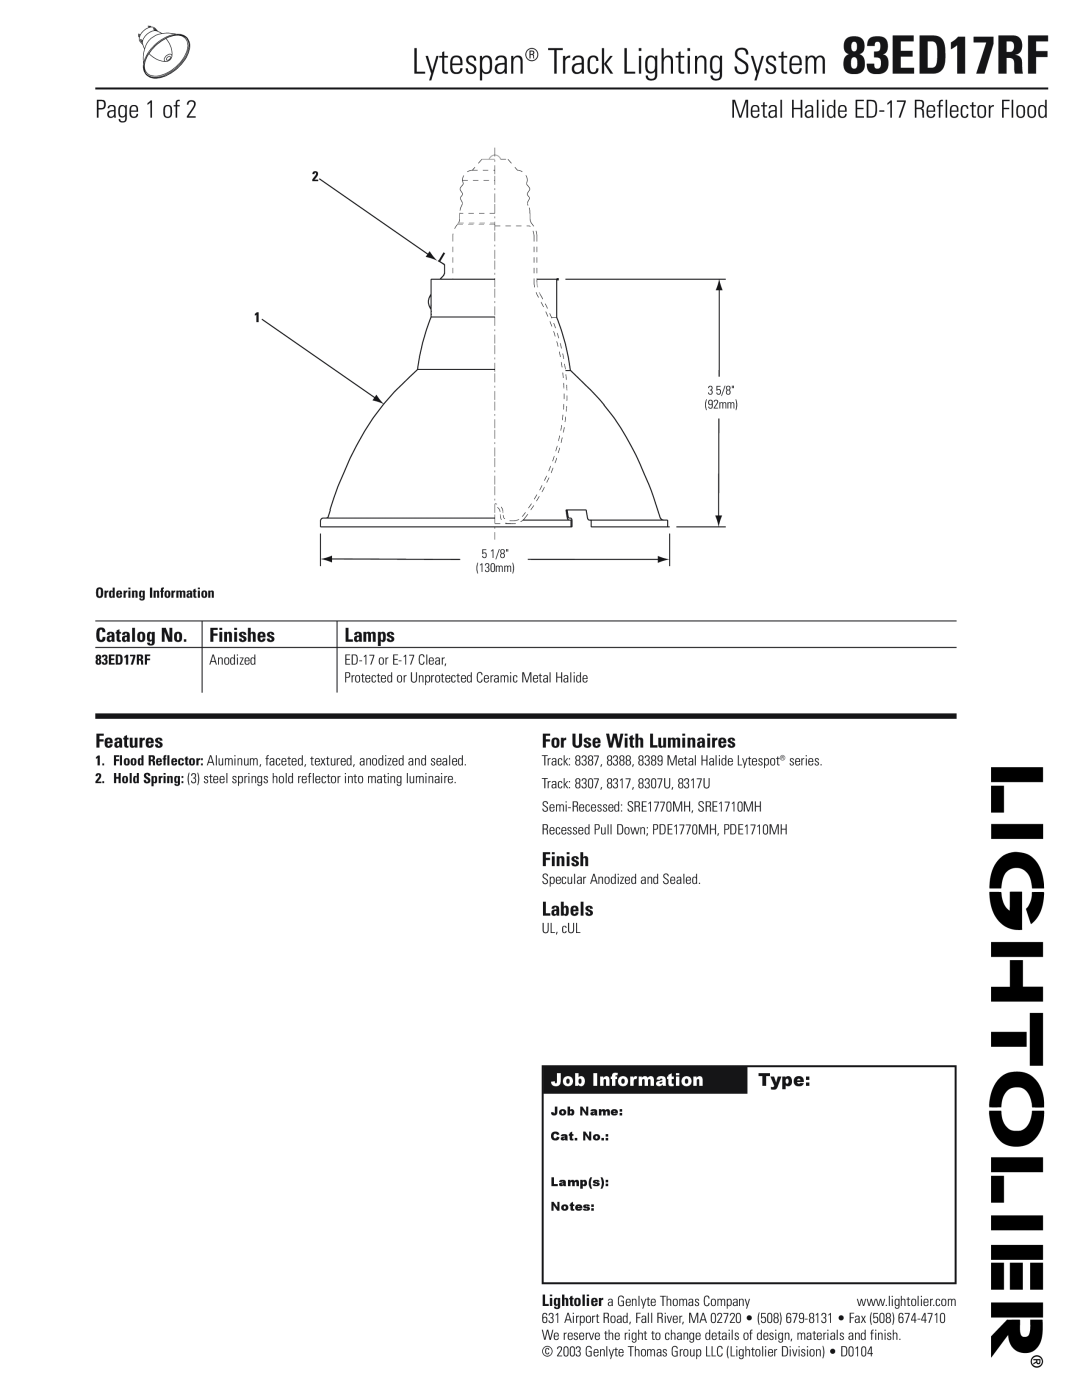 Lightolier manual Lytespan Track Lighting System 83ED17RF, Page 1 of, Metal Halide ED-17Reflector Flood, Catalog No 